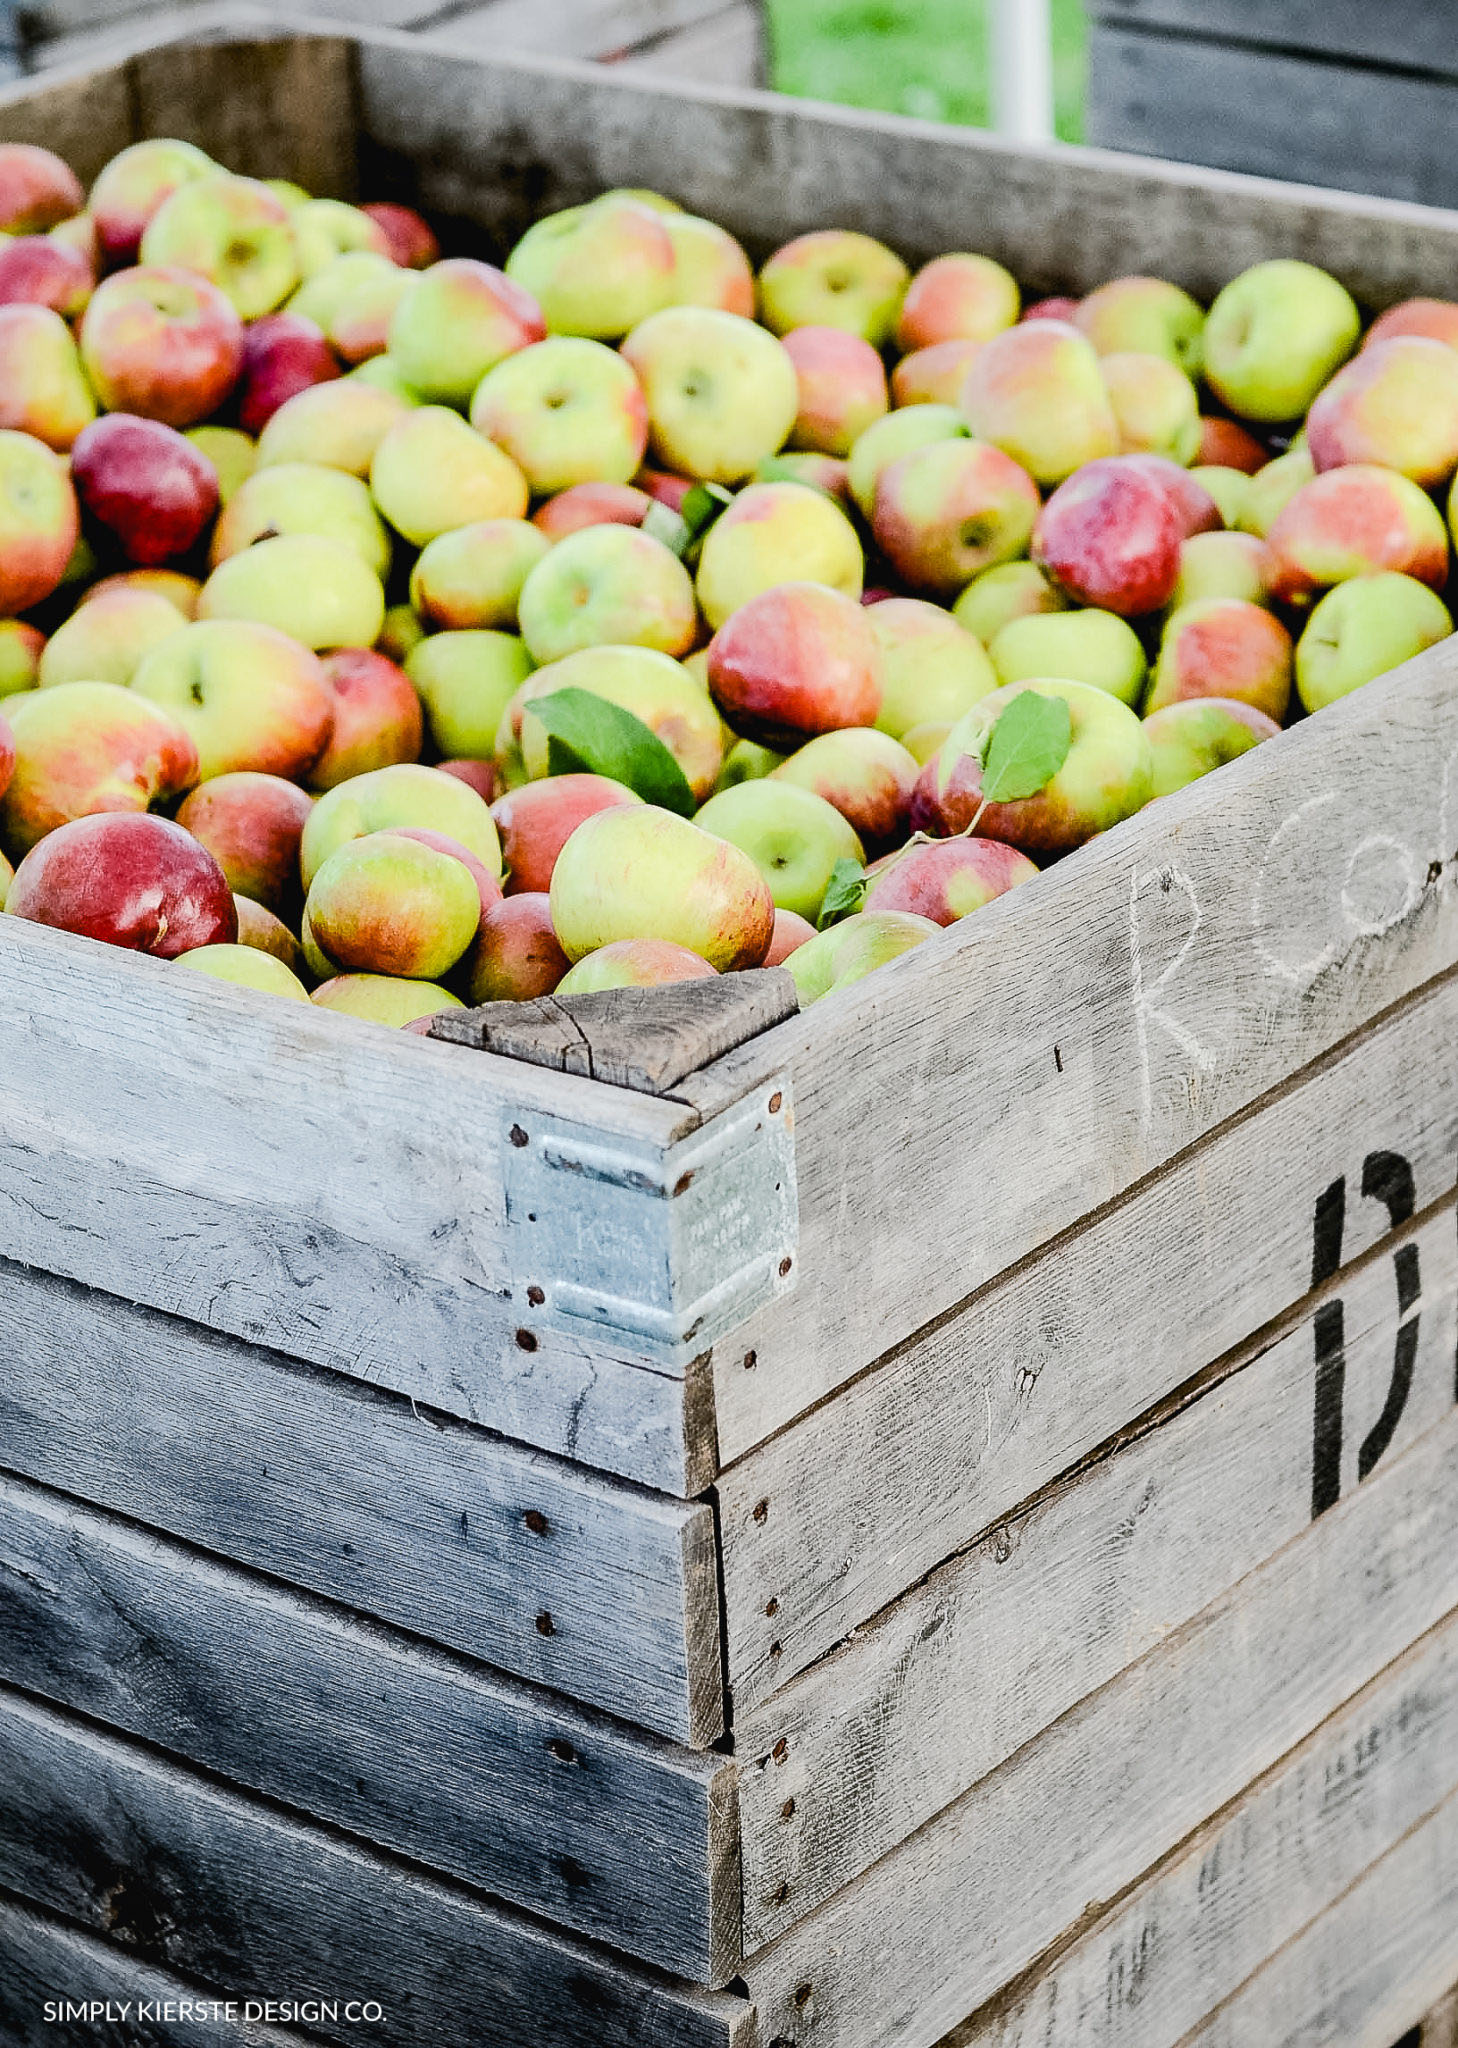 Apple Picking | Apple Farm | Fall Family Tradition | oldsaltfarm.com